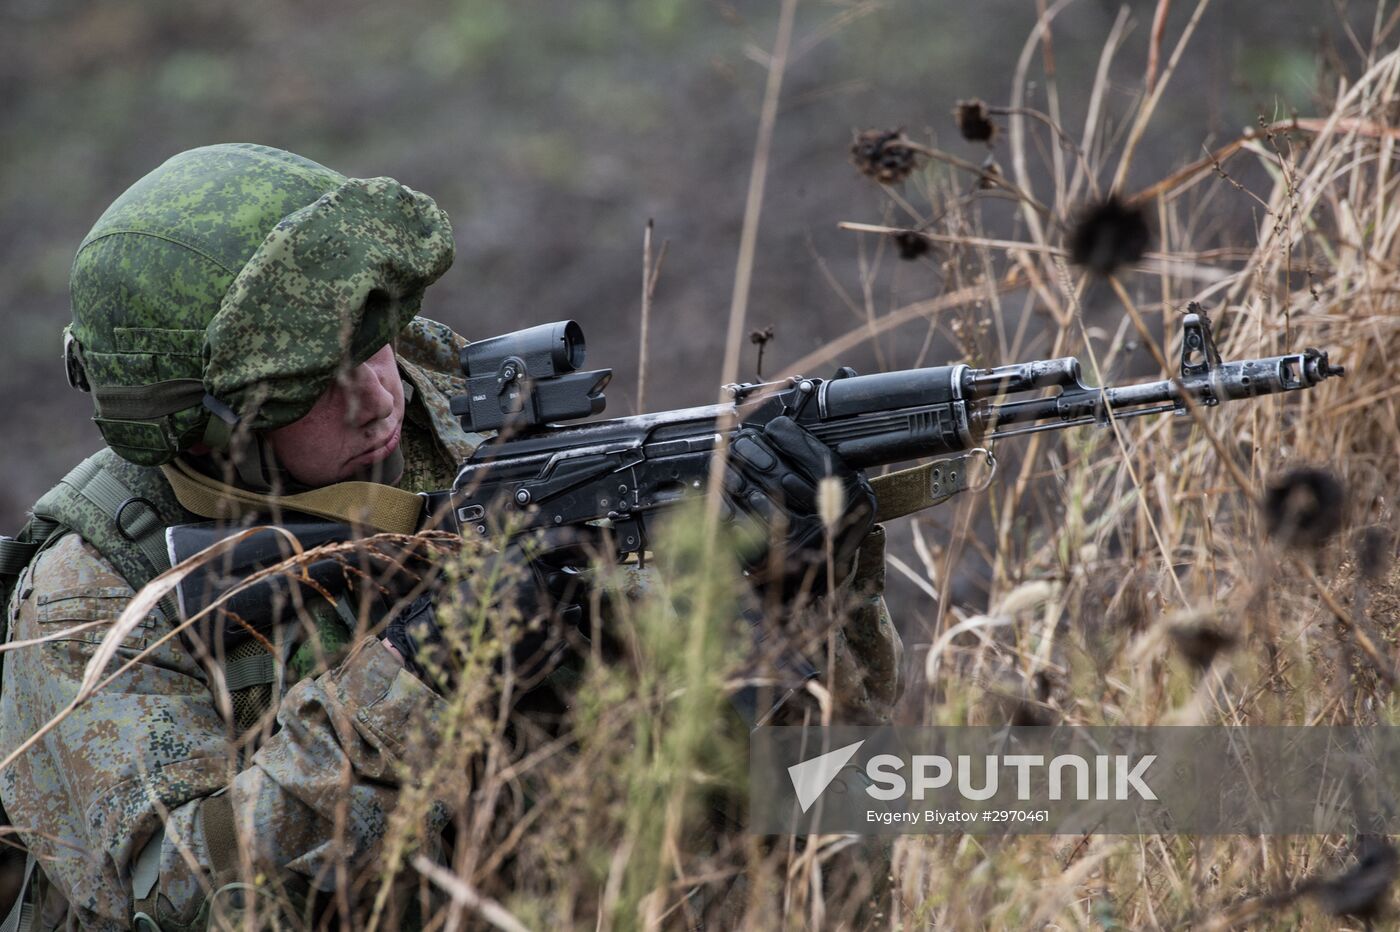 Slavic Brotherhood 2016 military exercise of Russia, Belarus and Serbia